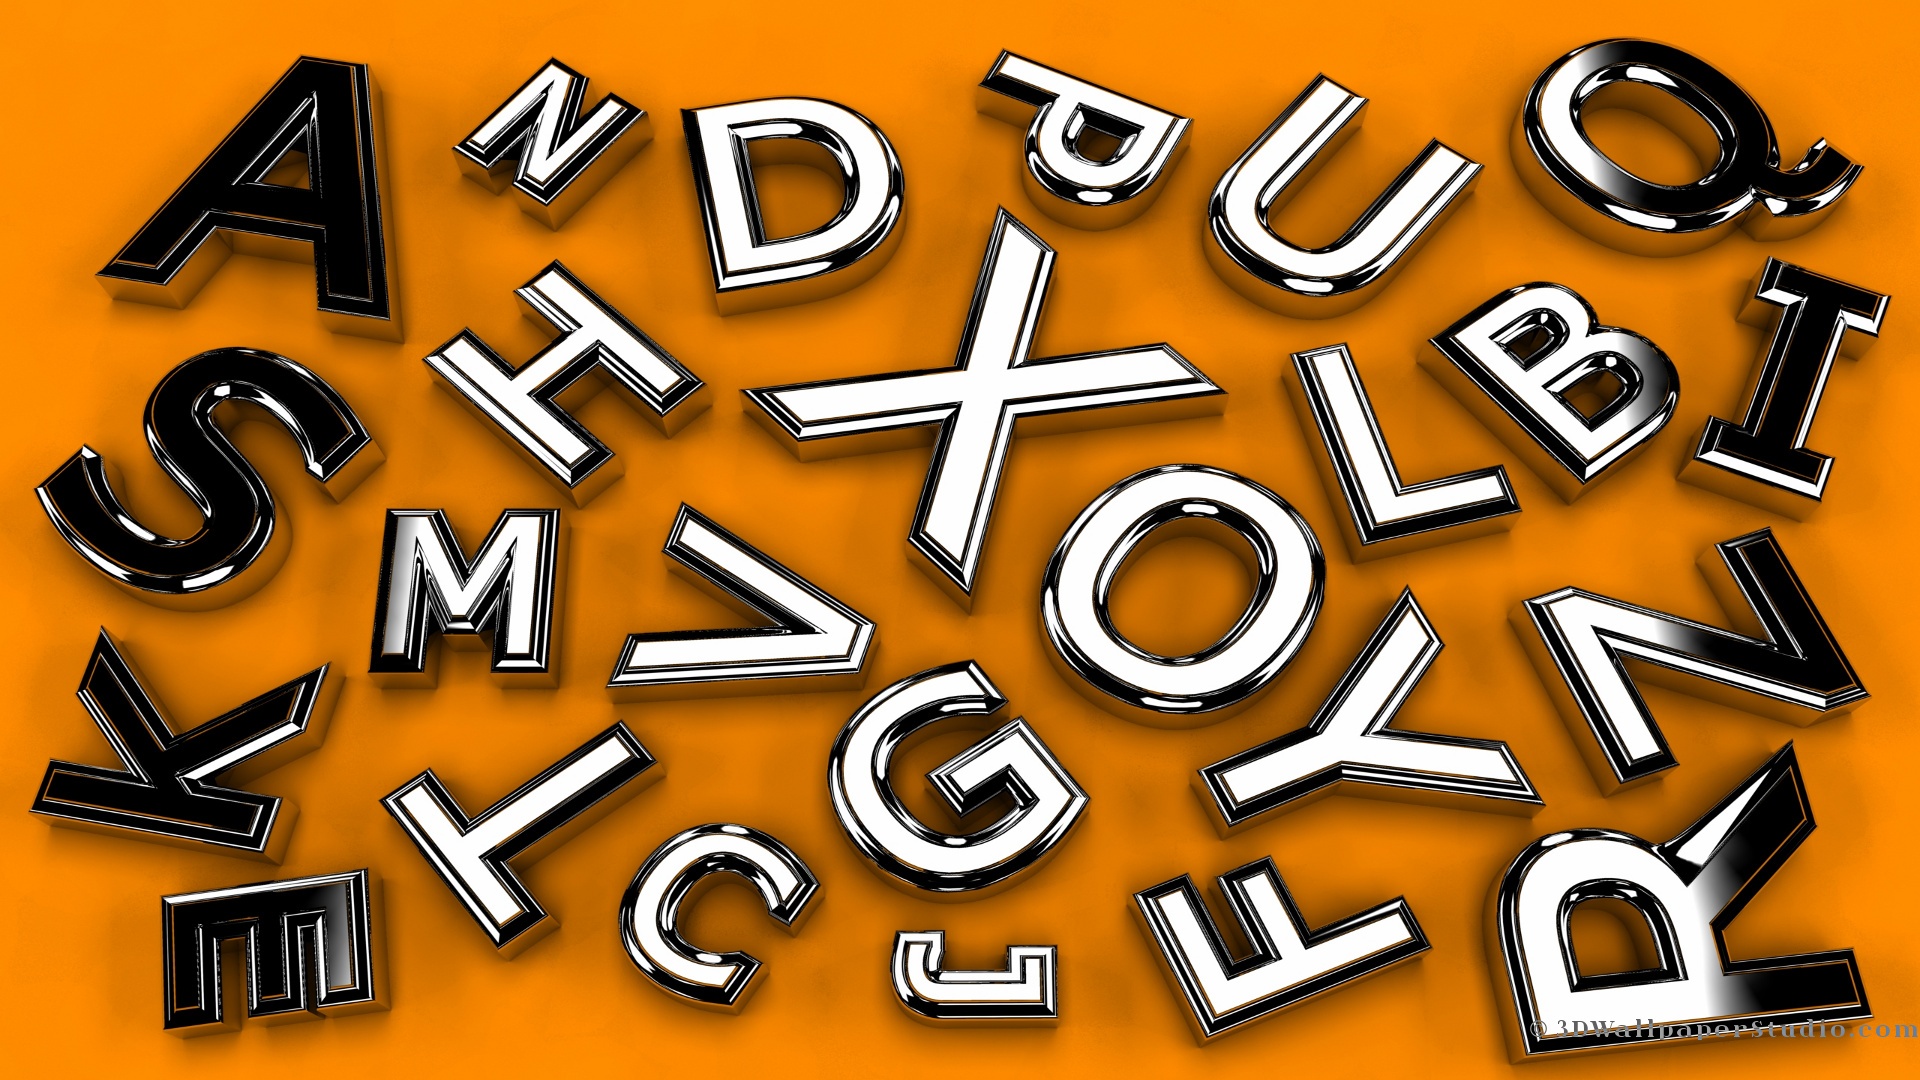 Free Download Alphabet Letters Wallpaper Random Photo Pictures